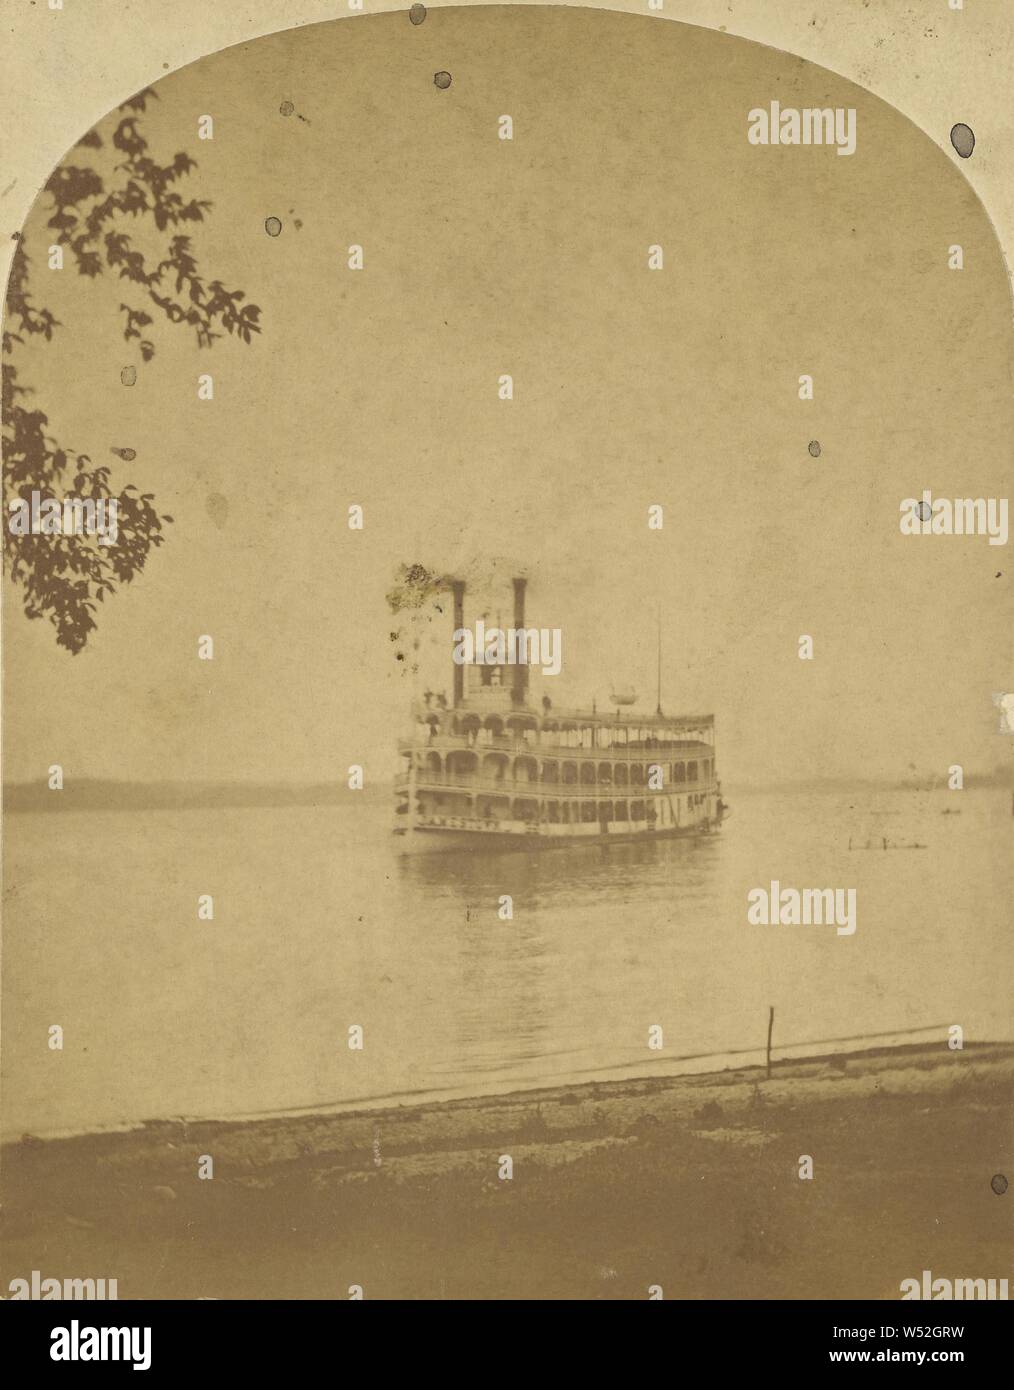 View on Chautauqua Lake., L. E. Walker (American, 1826 - 1916, active Warsaw, New York), about 1870, Albumen silver print Stock Photo